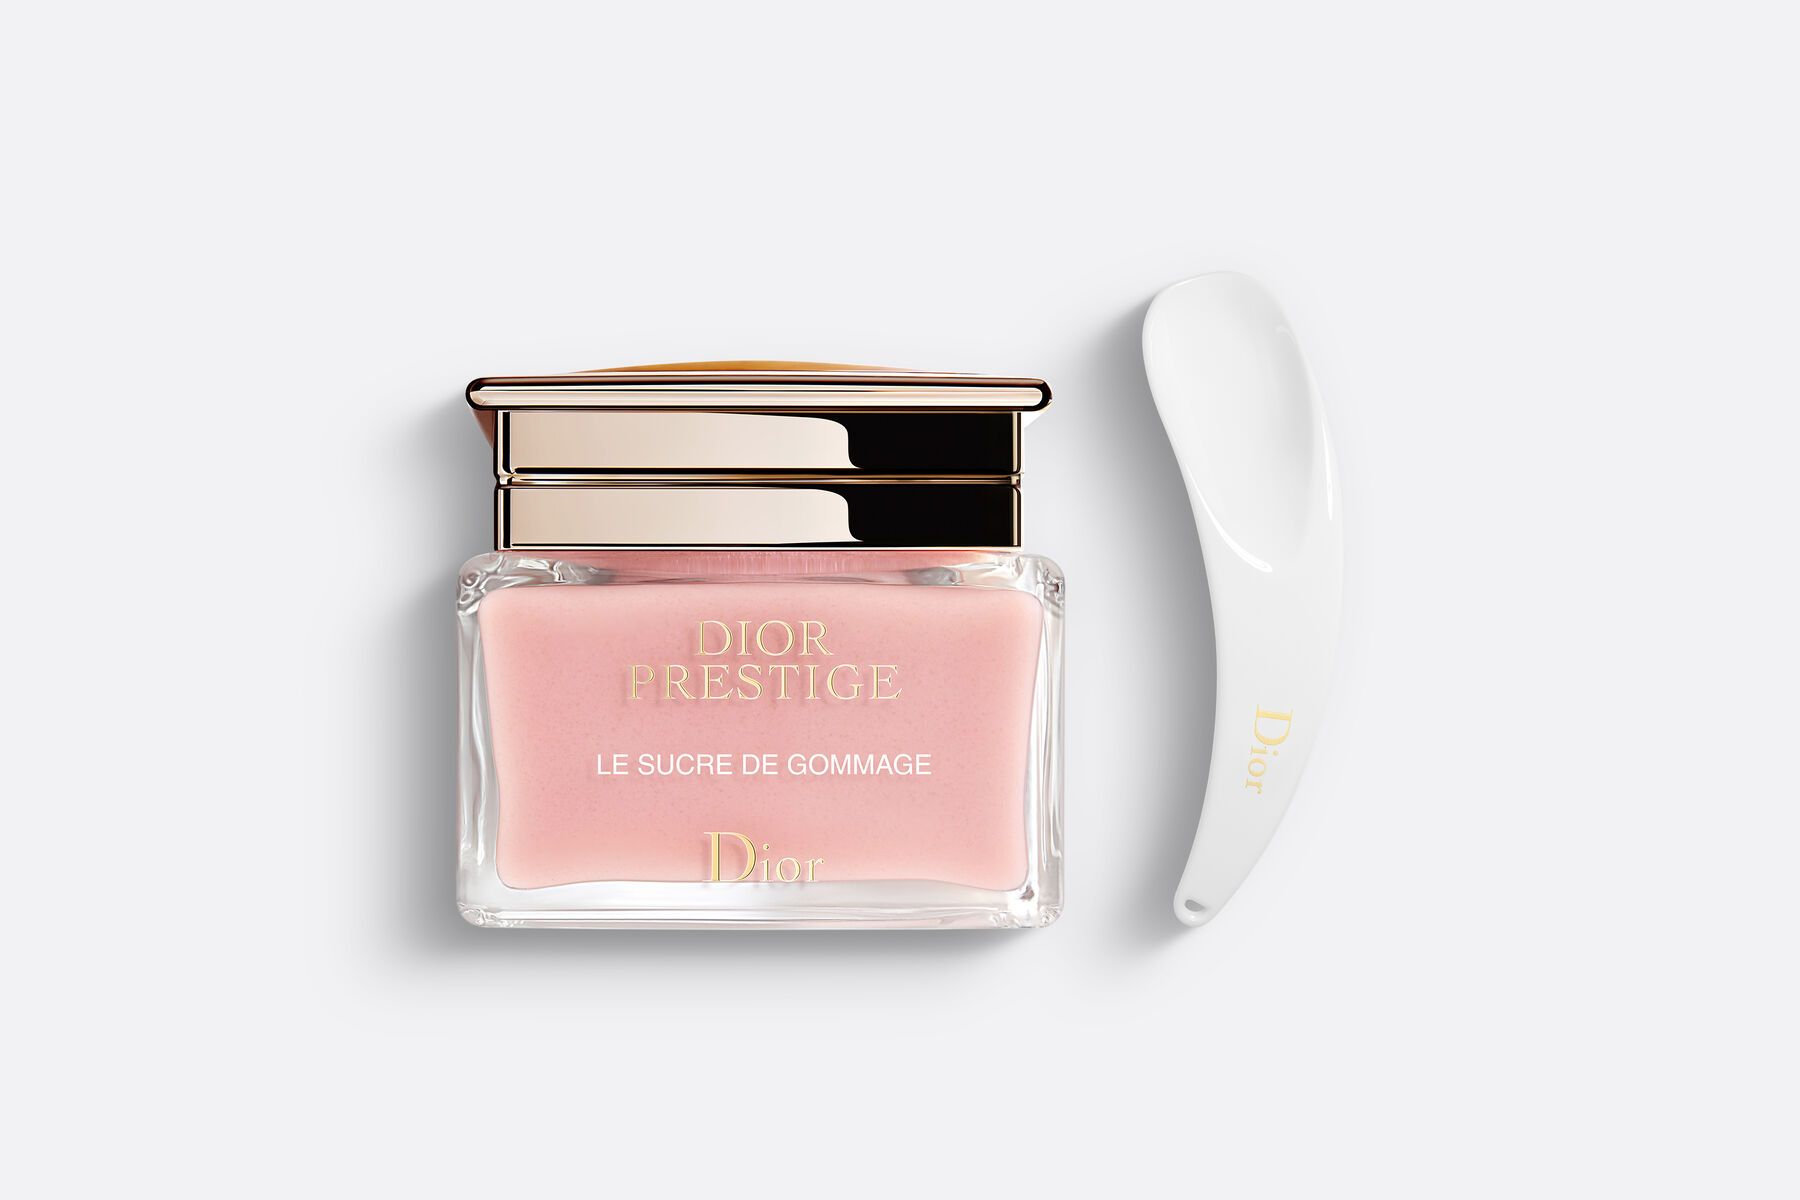 Dior Prestige Le Sucre de Gommage | Dior Beauty (US)